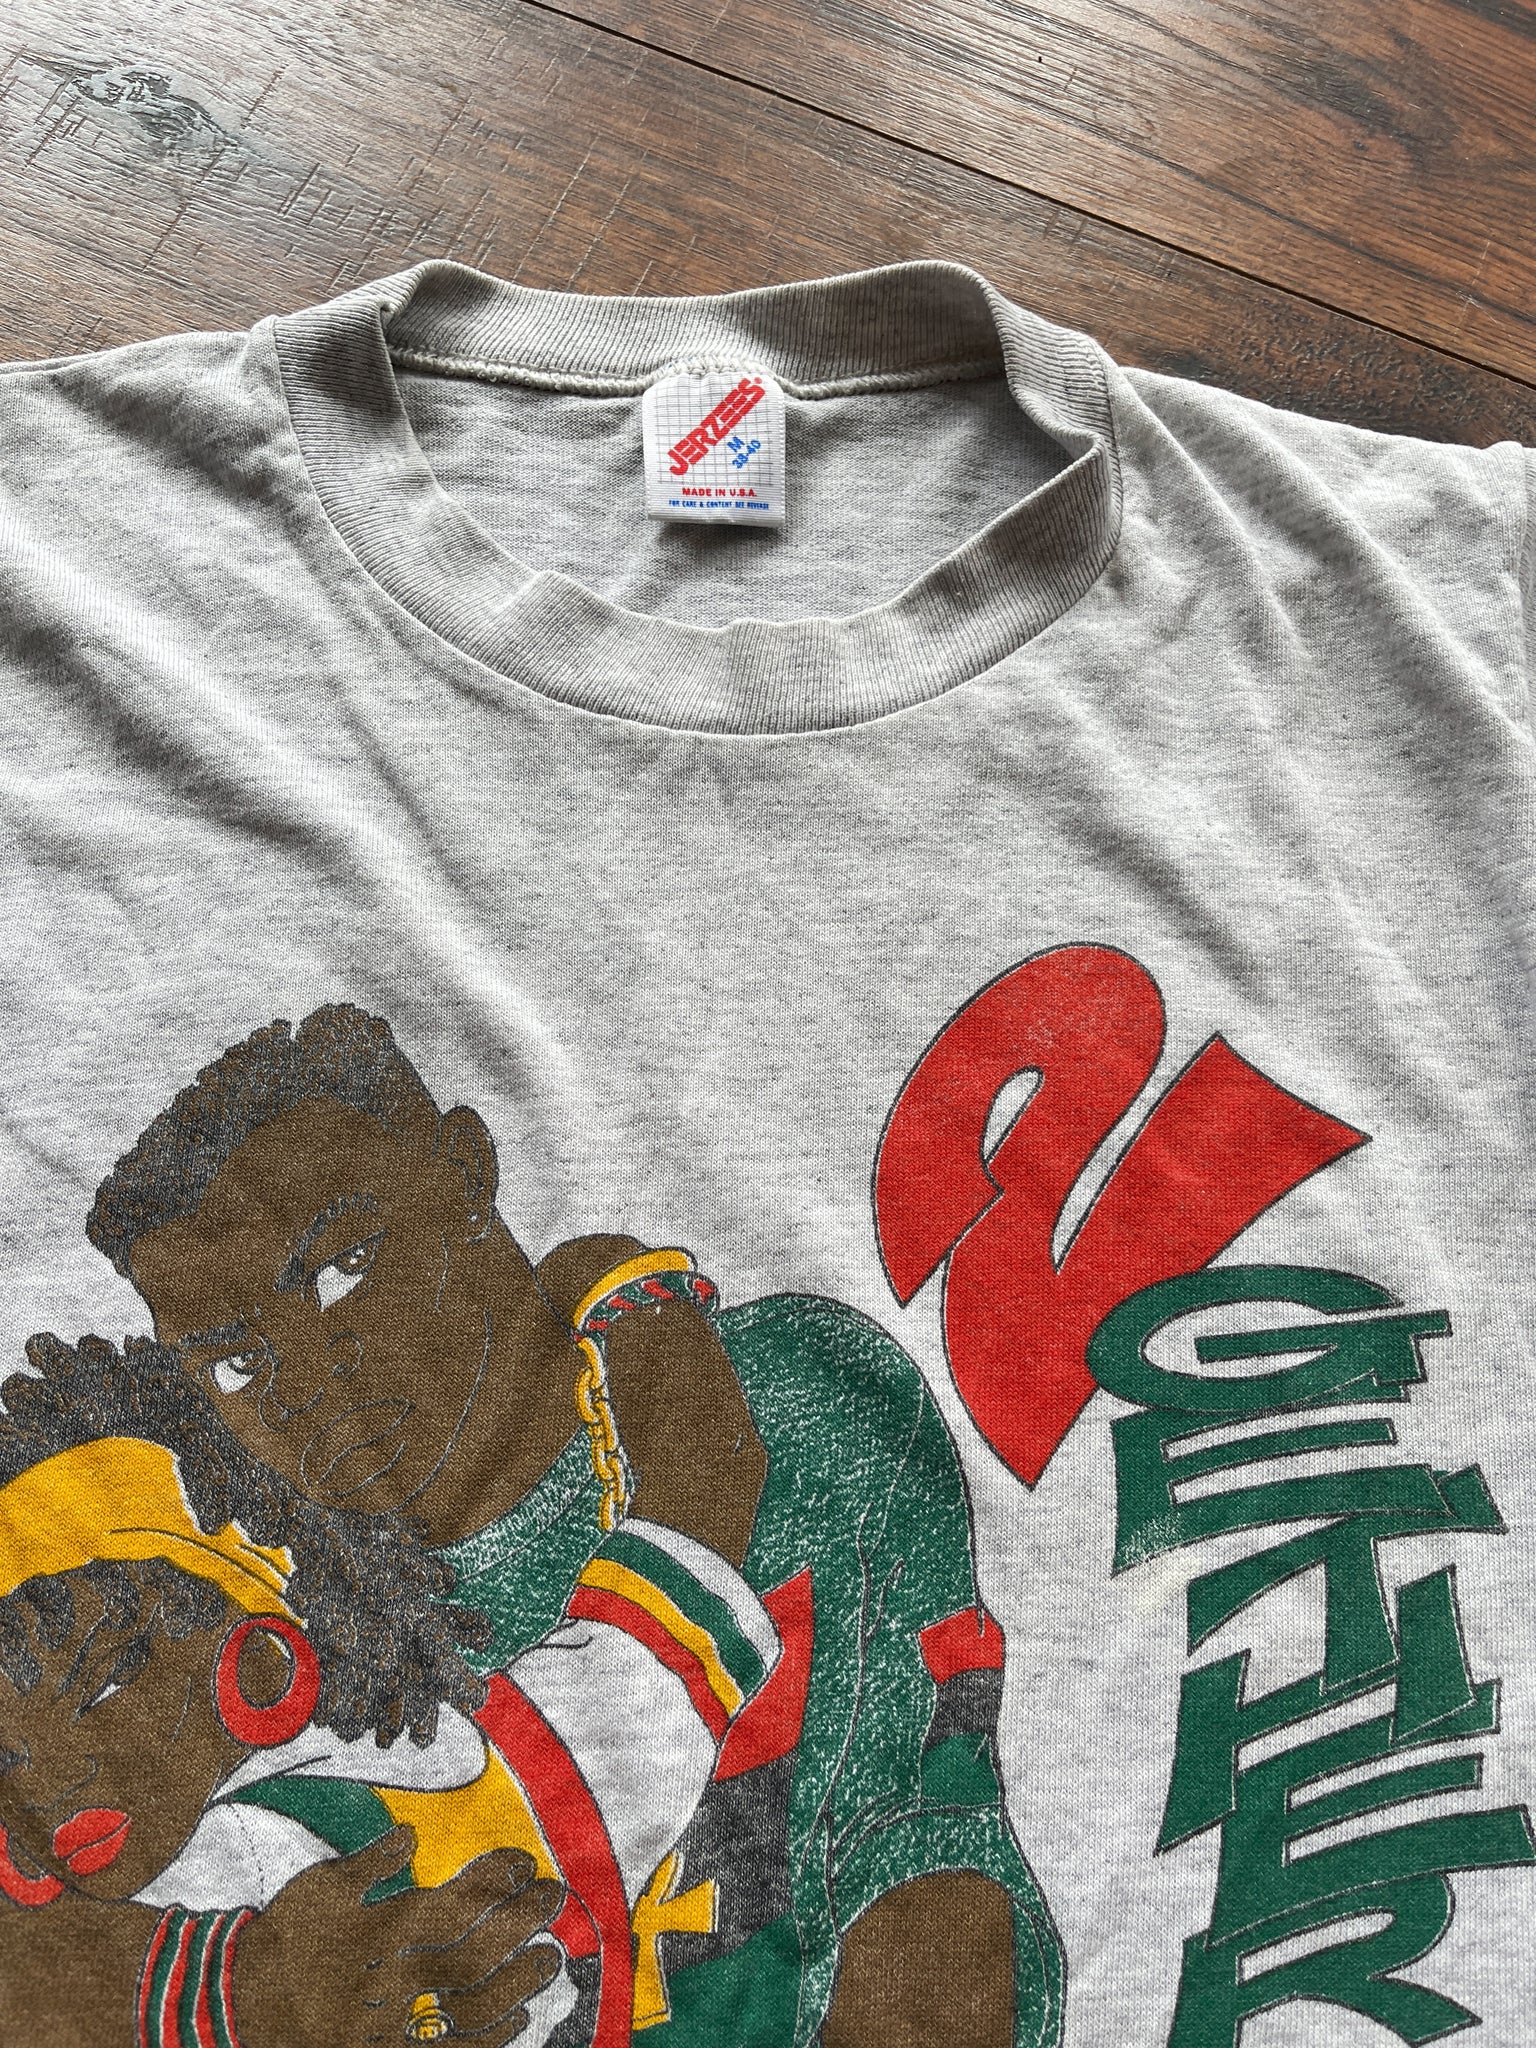 Vintage "2Gether 2Strong" T-Shirt (1992)